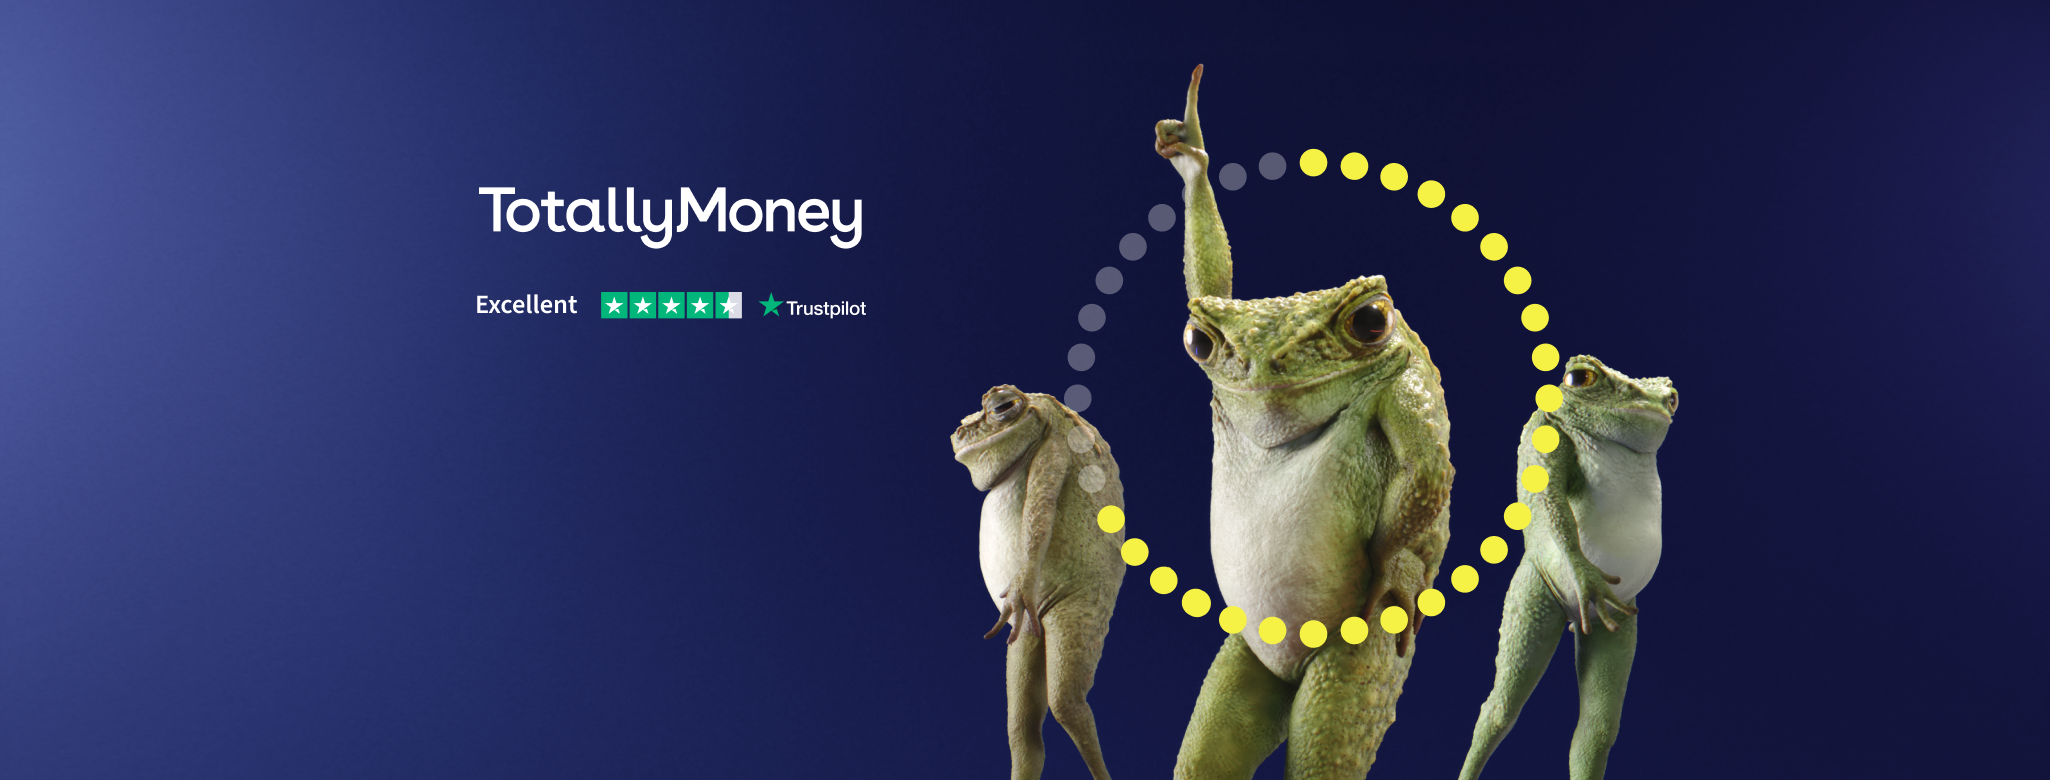 Toad-ally Money Tv advert